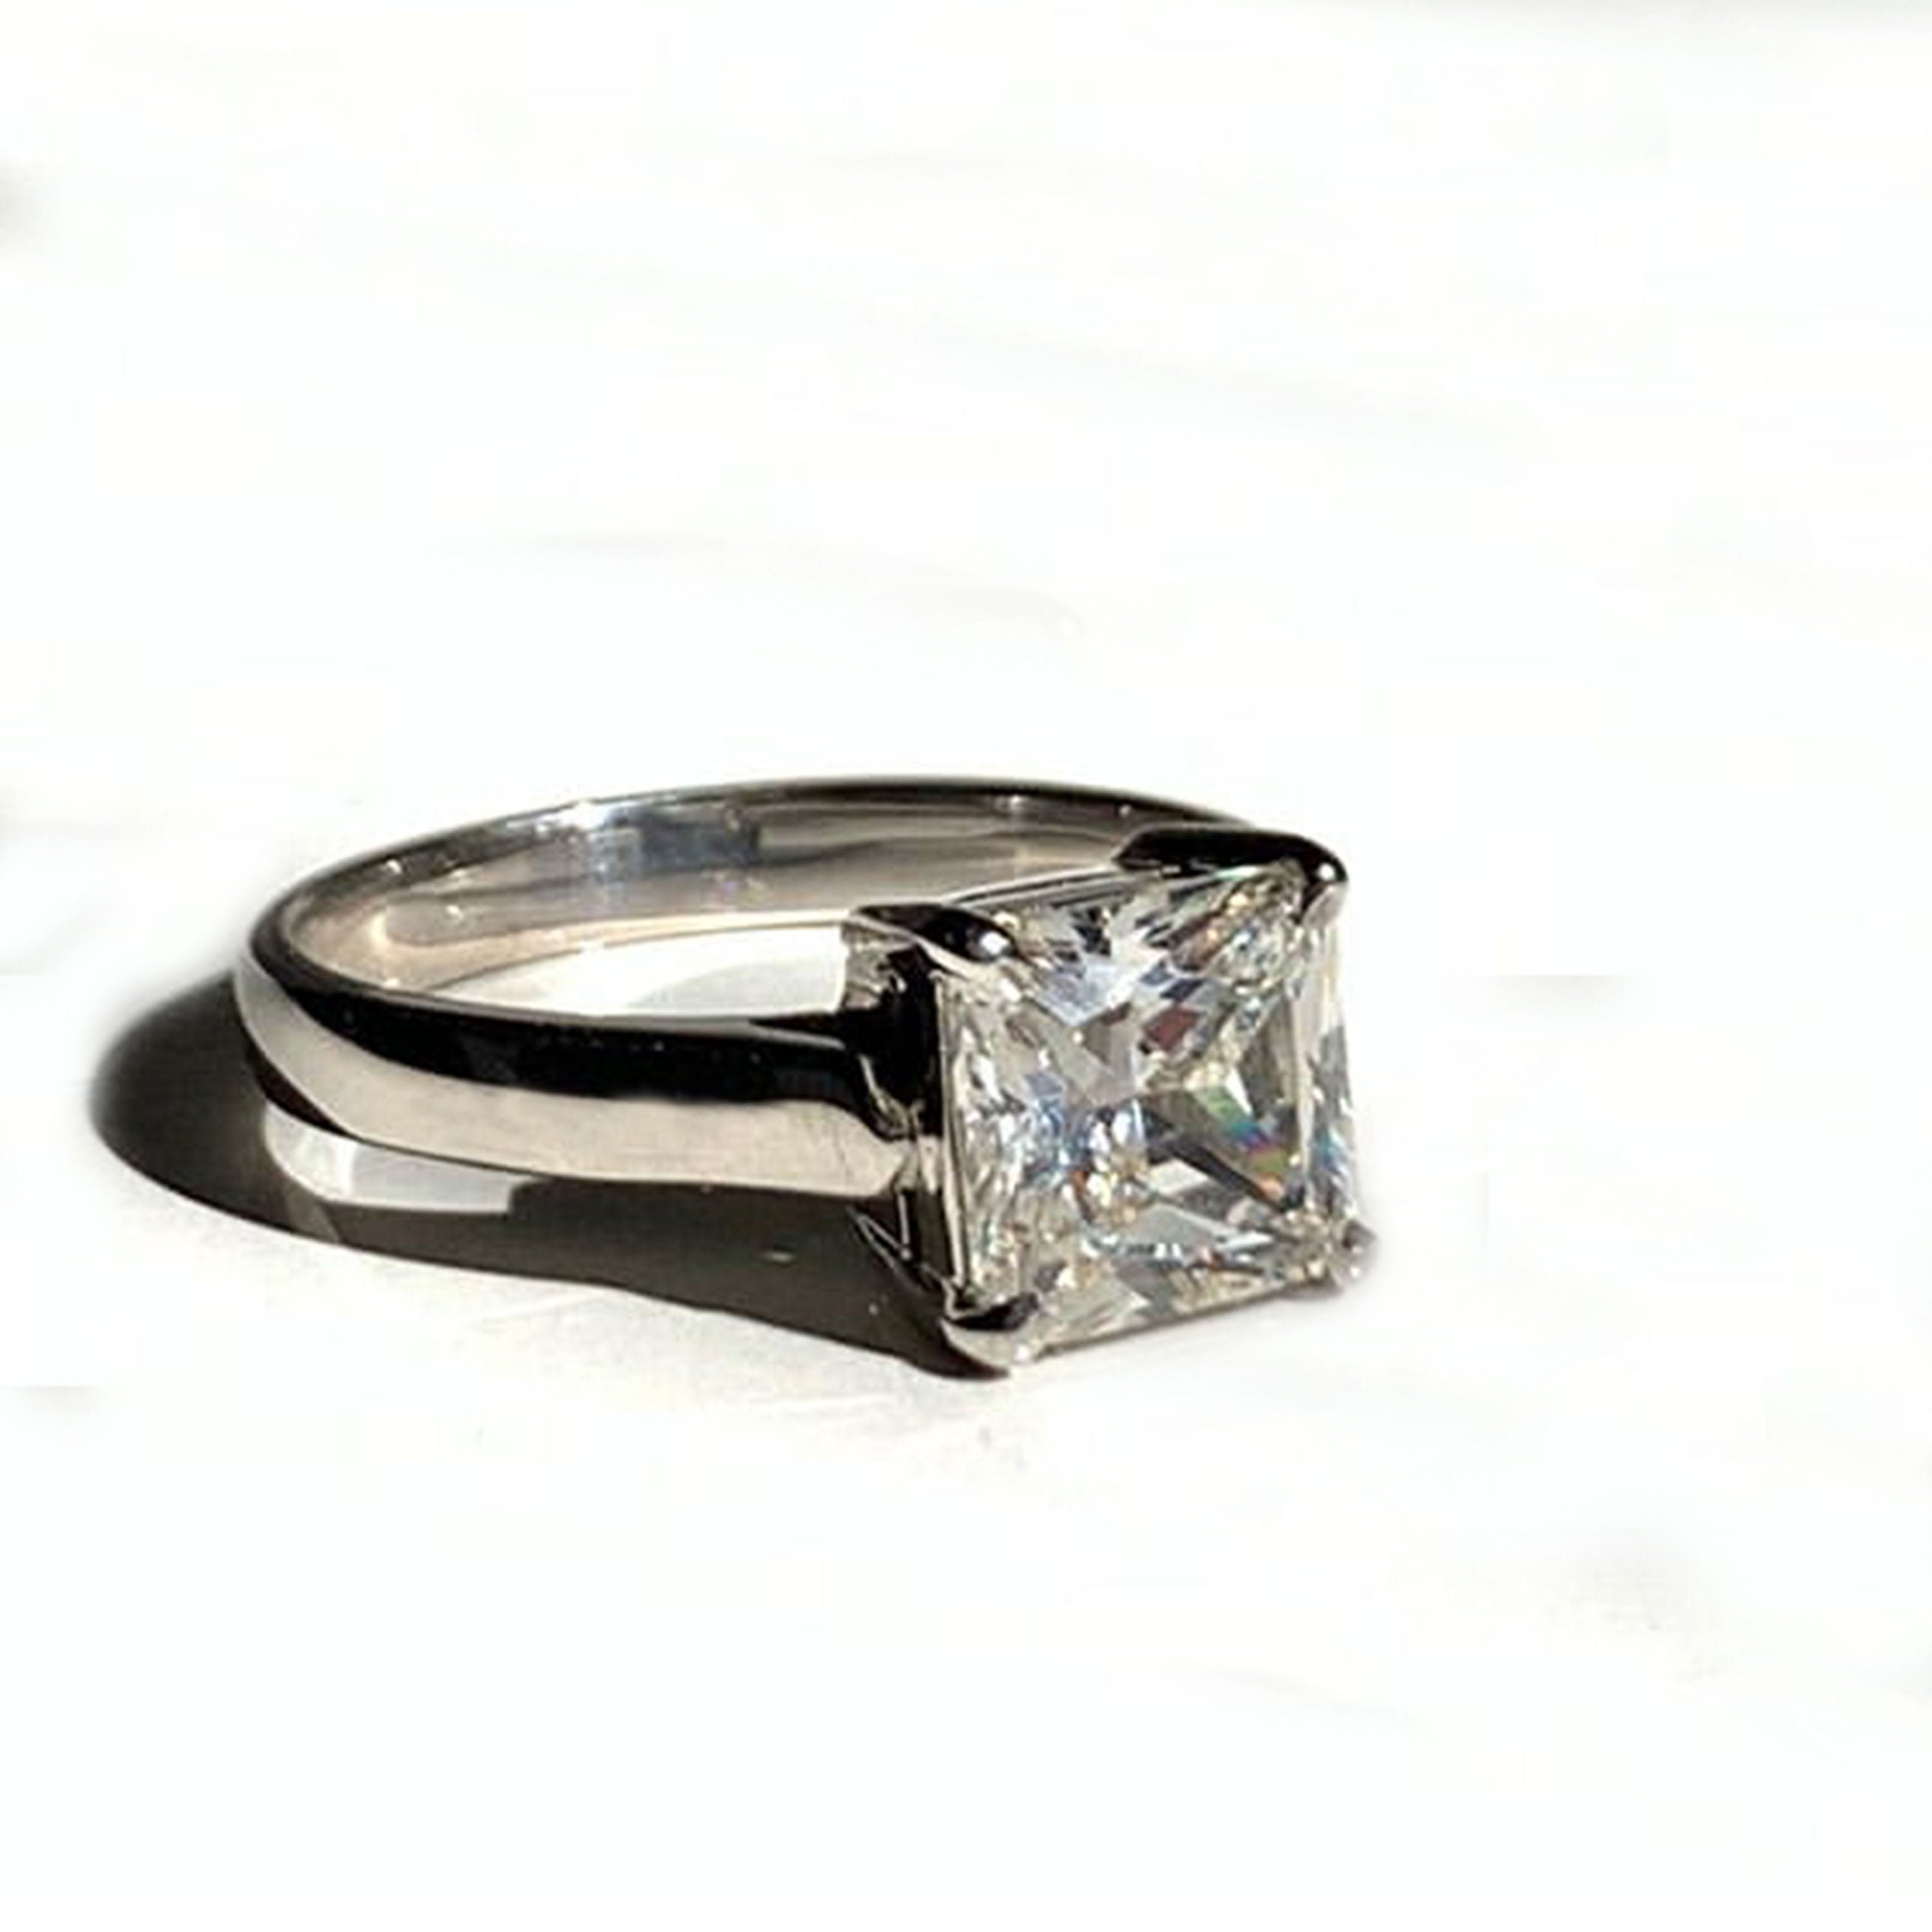 White Zircon Ring Women Index Finger Ring Fashion Couple Ring Set Crystal  Ring | eBay